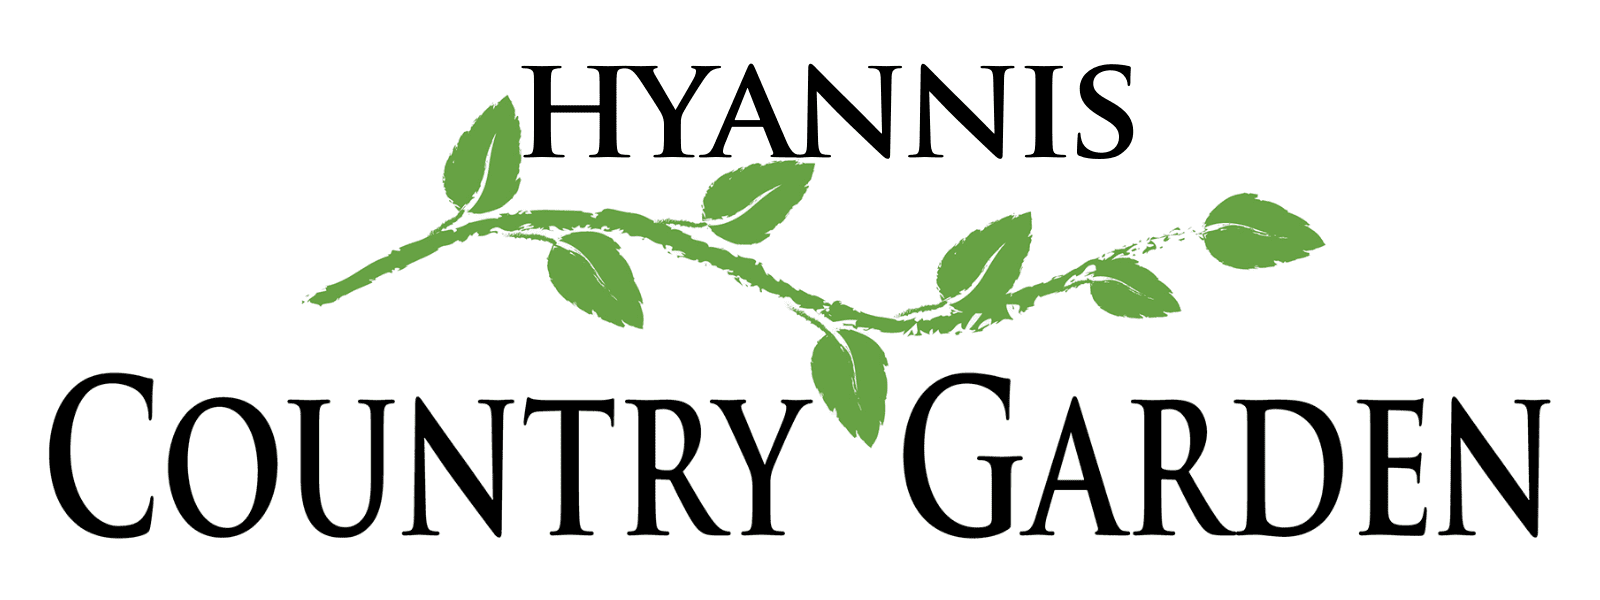 Links - Hyannis Country Garden